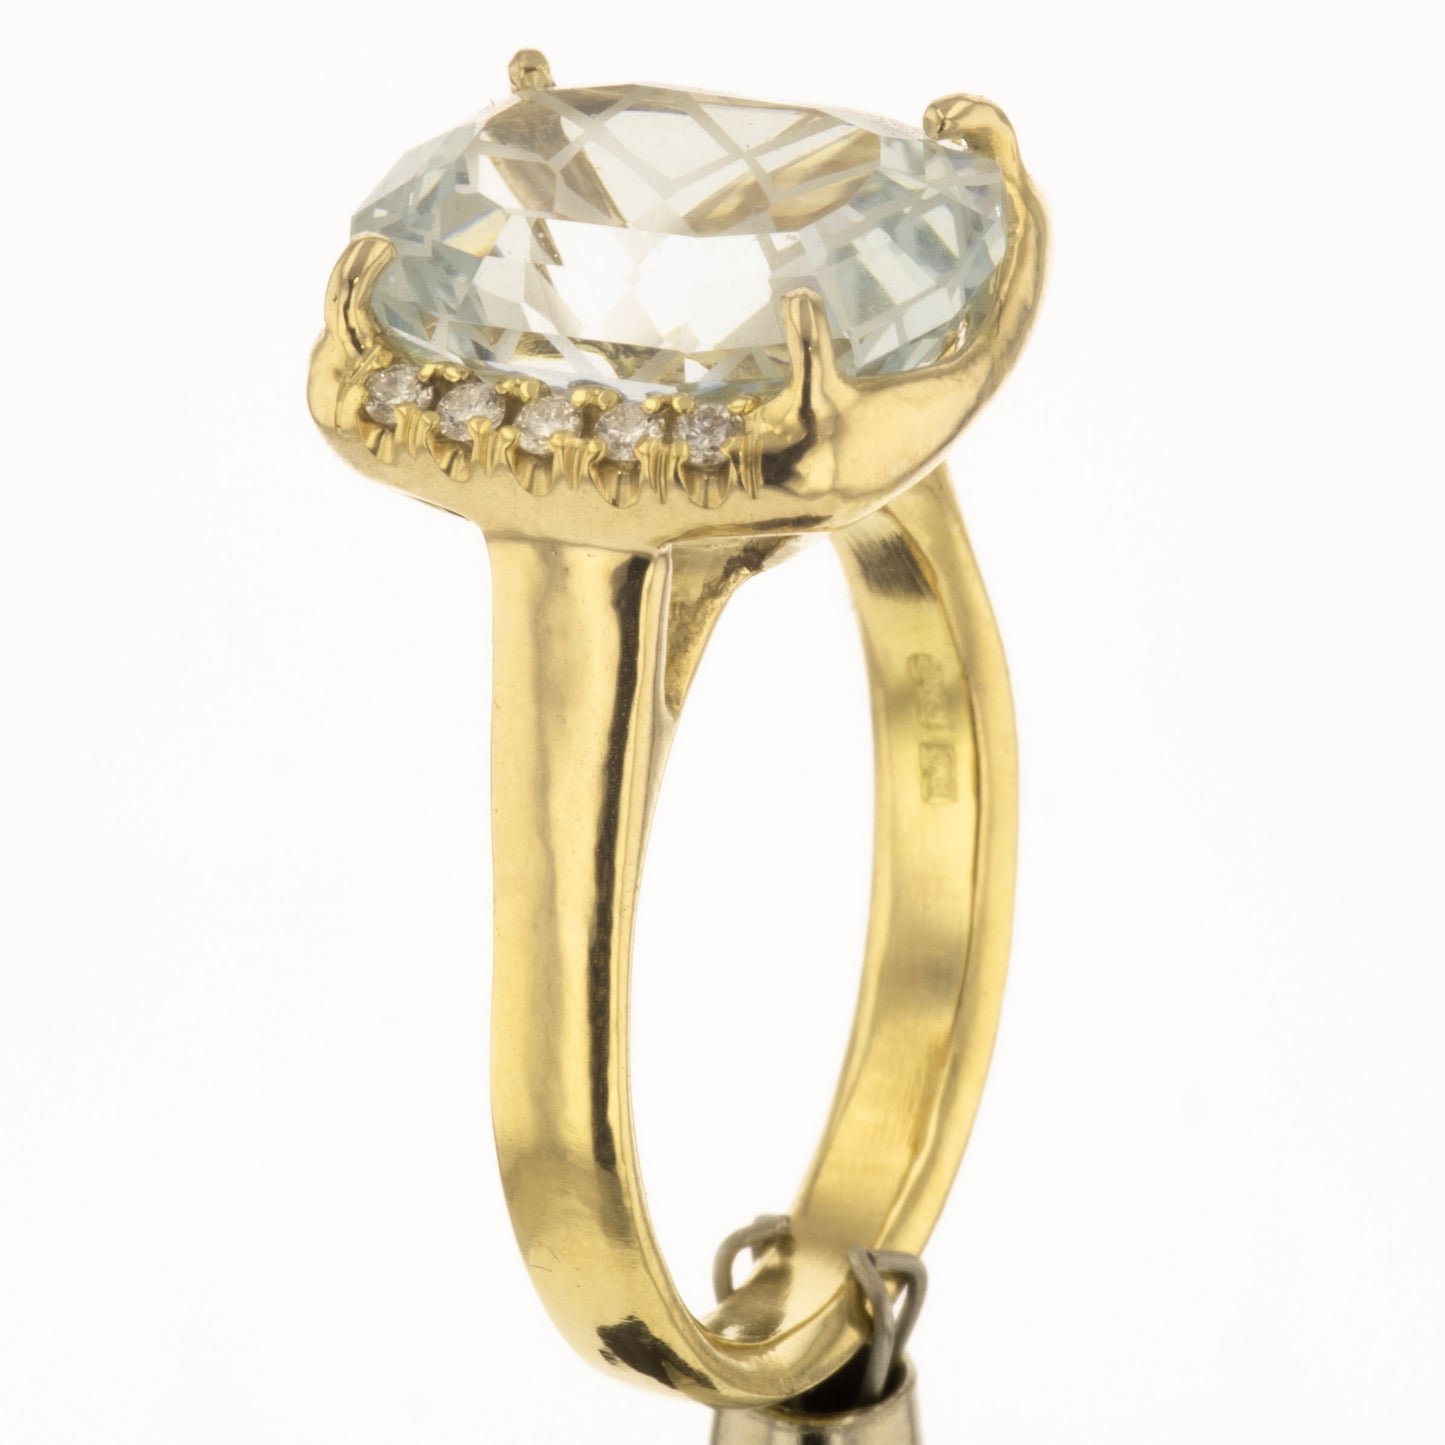 Topaz and diamond ring